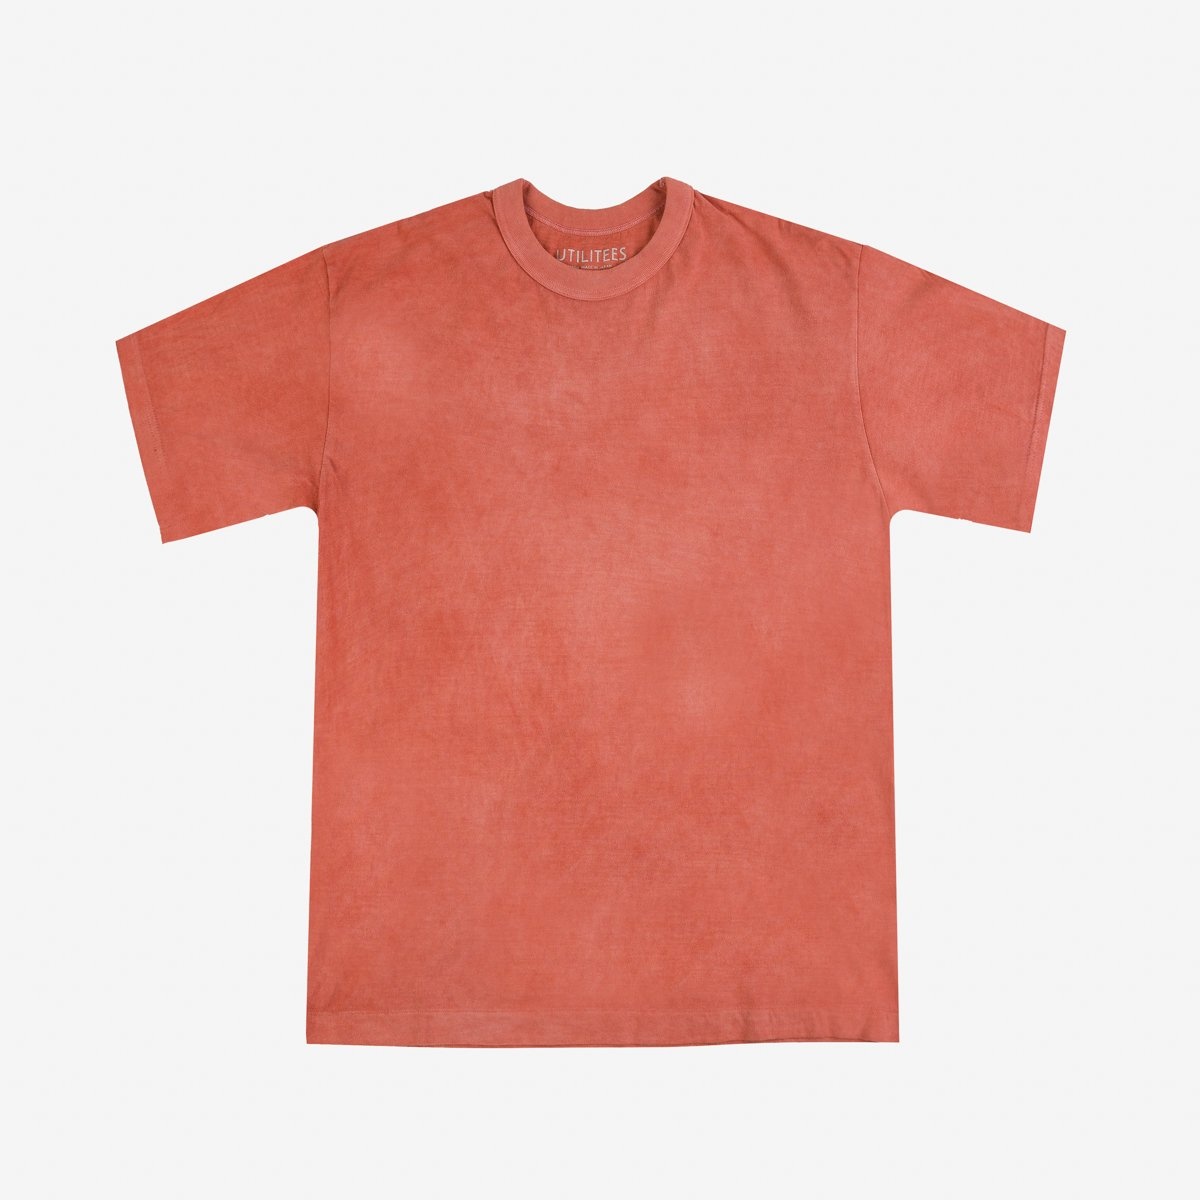 UTIL-HDYE-COR UTILITEES - 5.5oz Loopwheel Crew Neck T-Shirt - Hand Dyed Coral Pink - 1